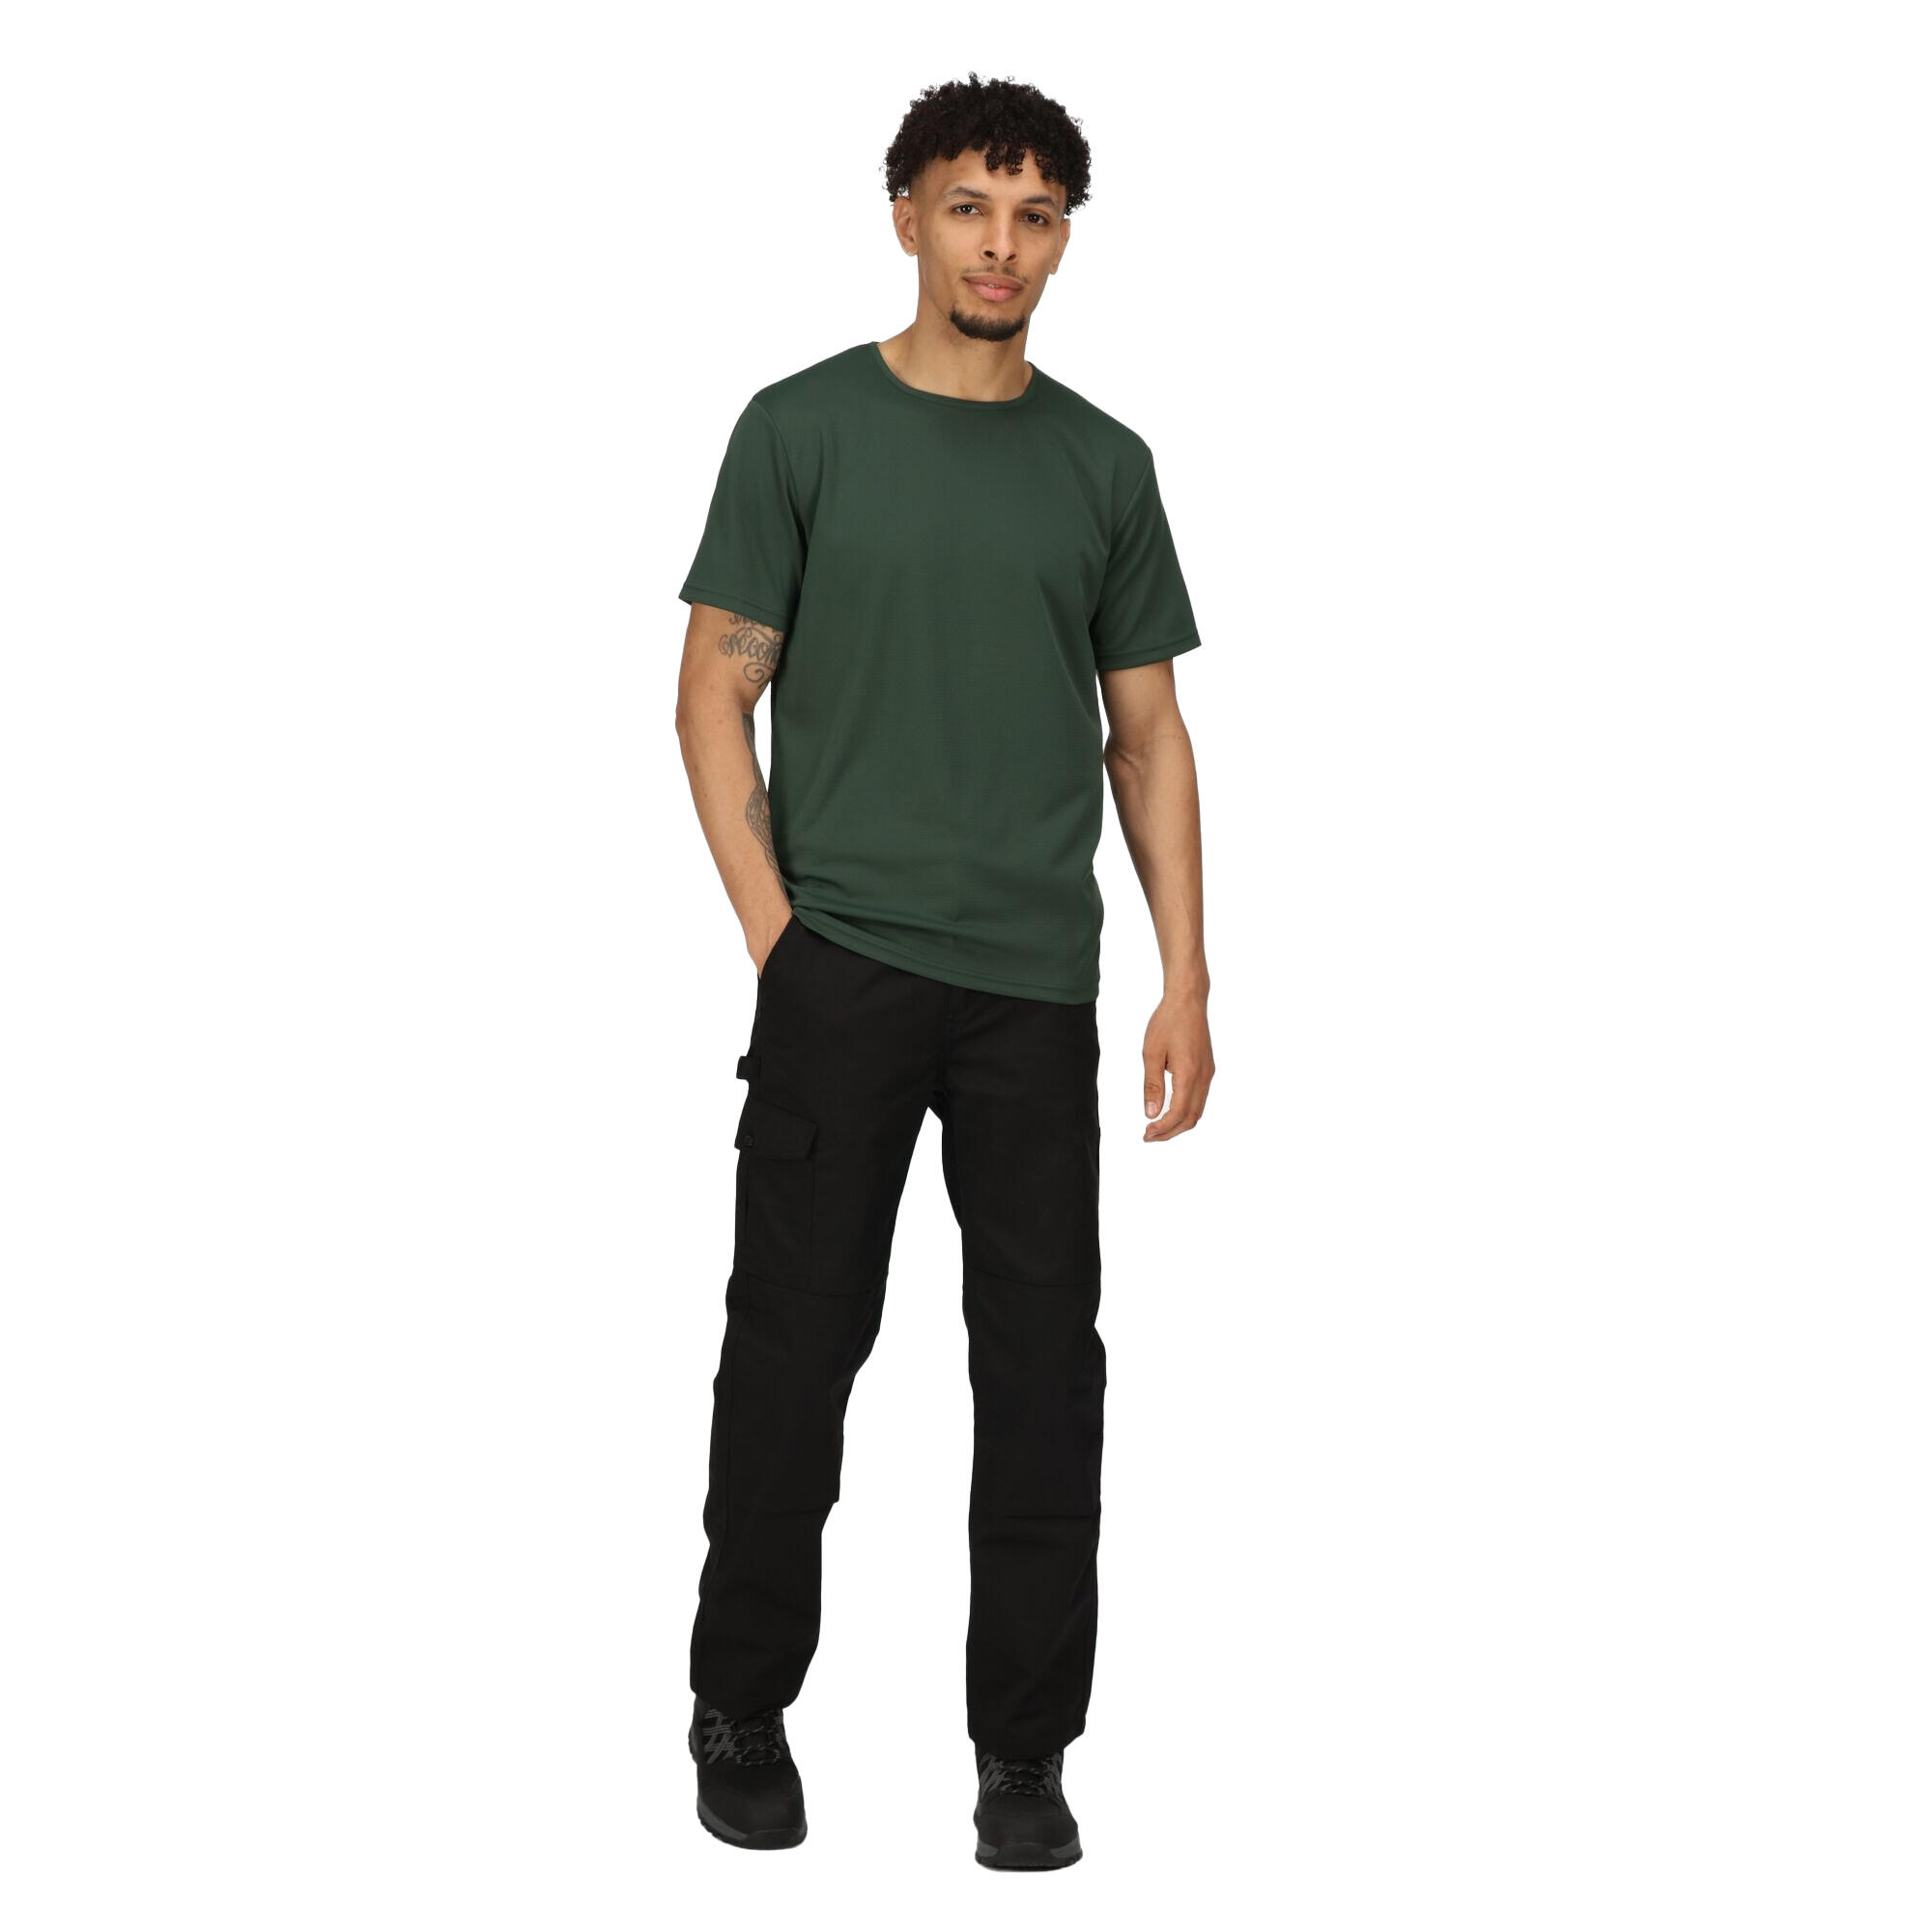 Mens Pro Reflective Moisture Wicking TShirt (Dark Green) 4/5